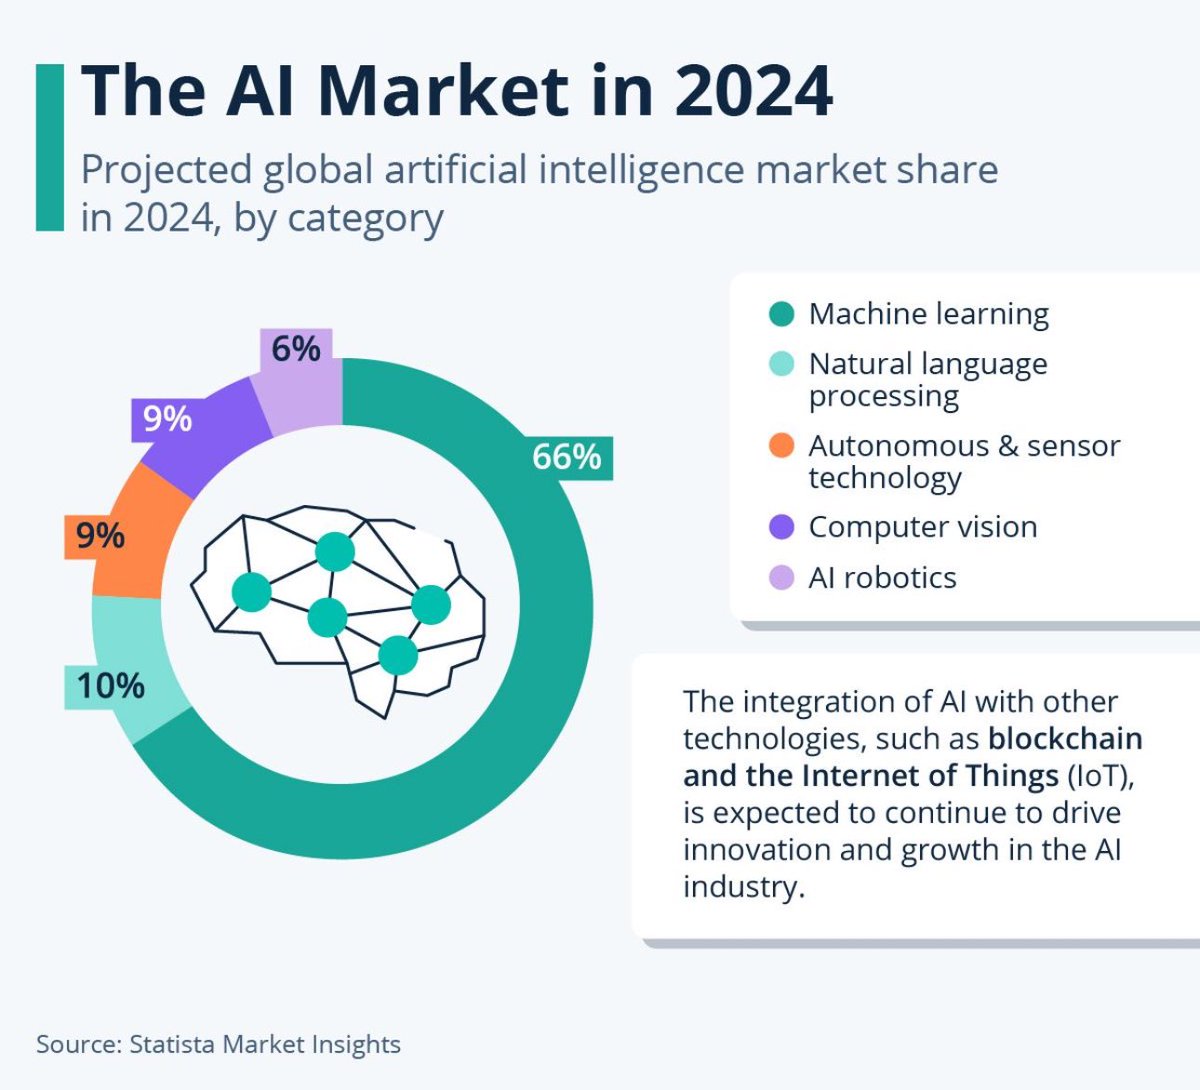 #AI market is experiencing tremendous growth and diversification across various segments, including #MachineLearning, #NaturalLanguageProcessing, autonomous & sensor technology, #ComputerVision, & #AIRobotics. #EdgeComputing #NLP #ML #LLM